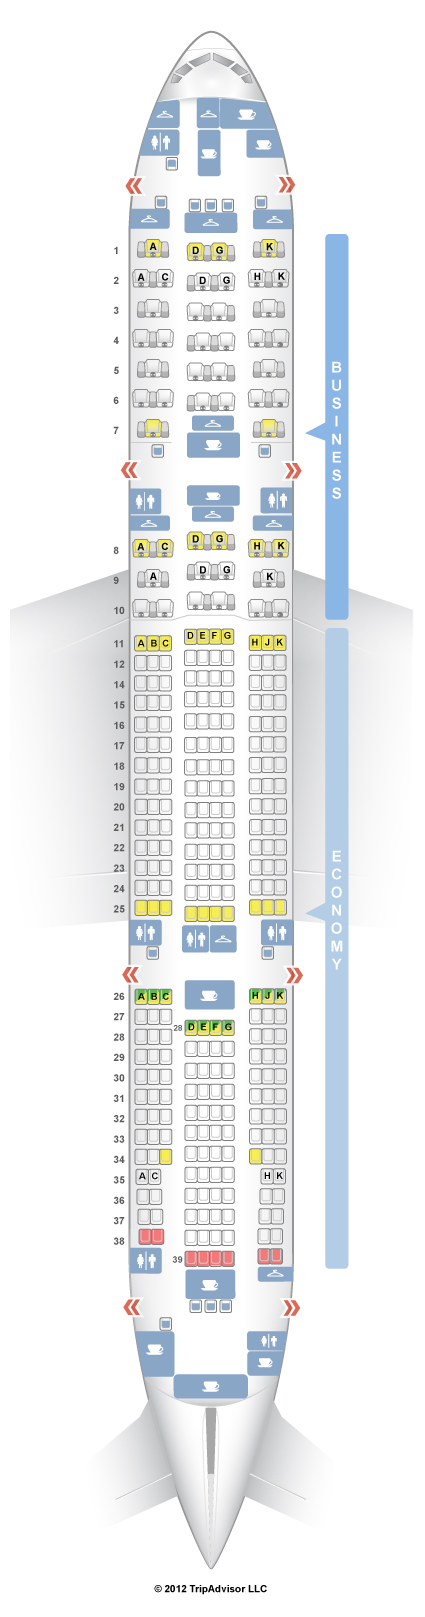 Ba 777 300 seat map